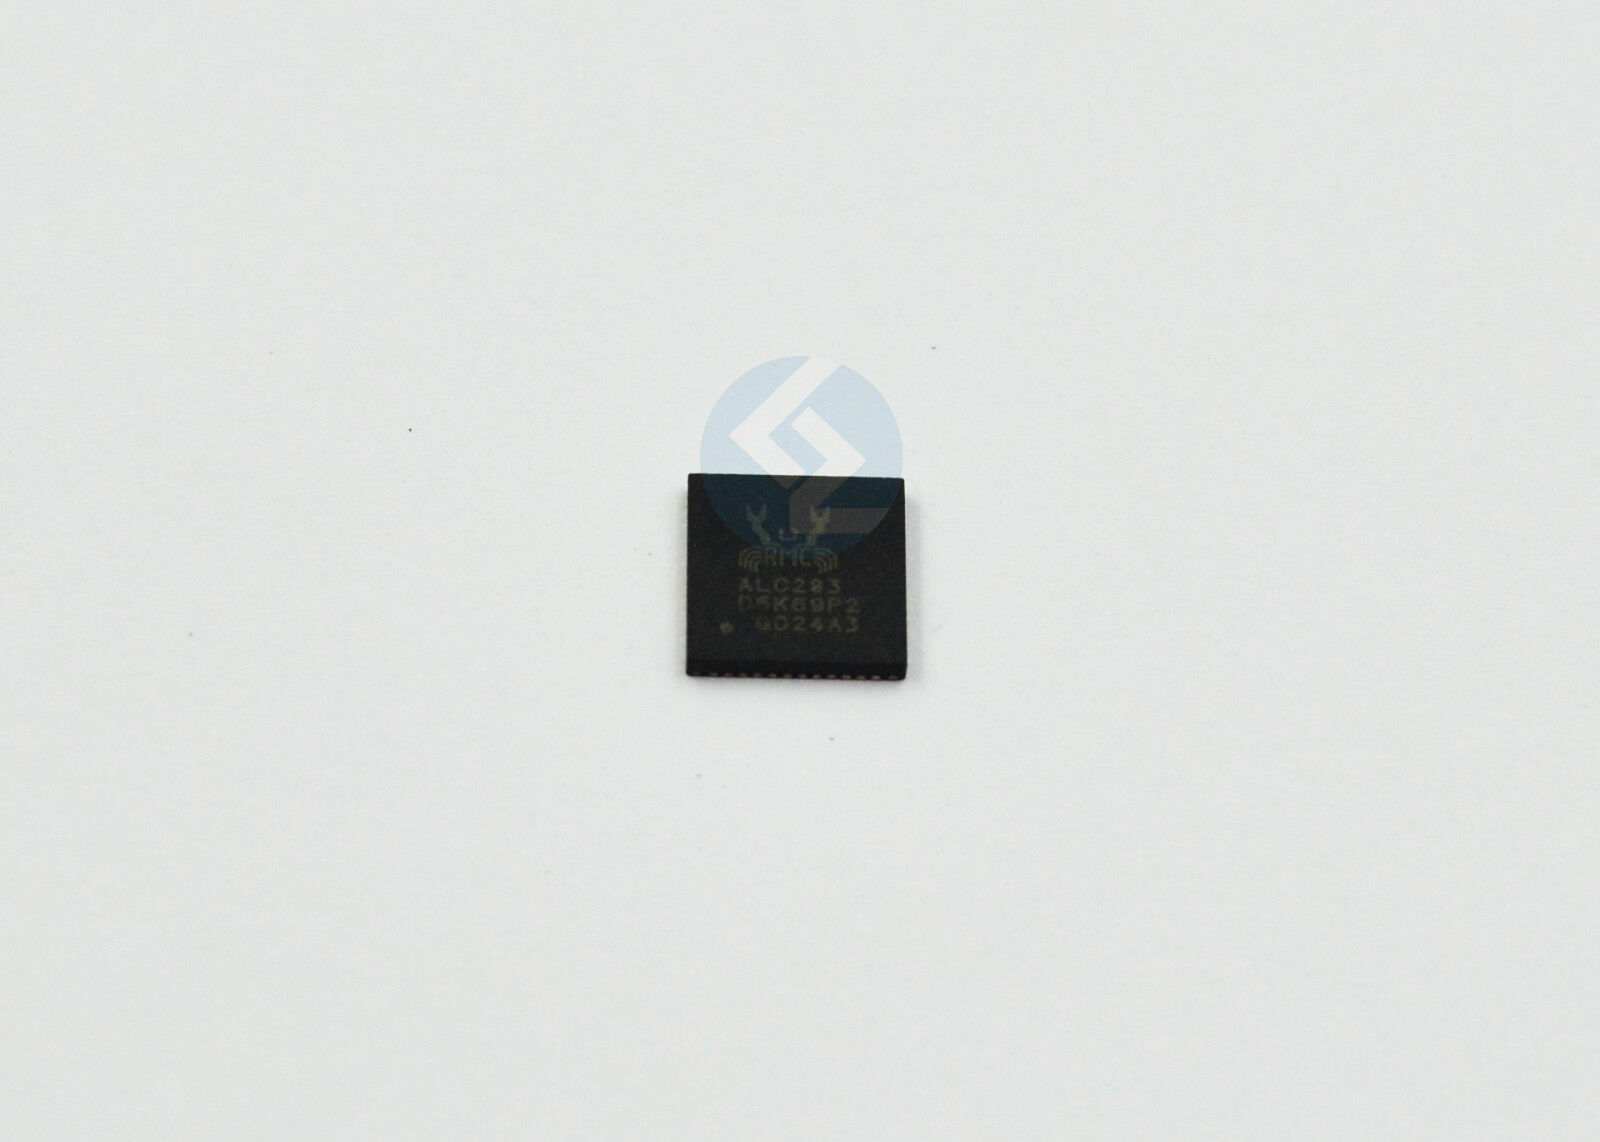 Lot of Realtek ALC283 TQFP 48 pin Power IC Chip Chipset